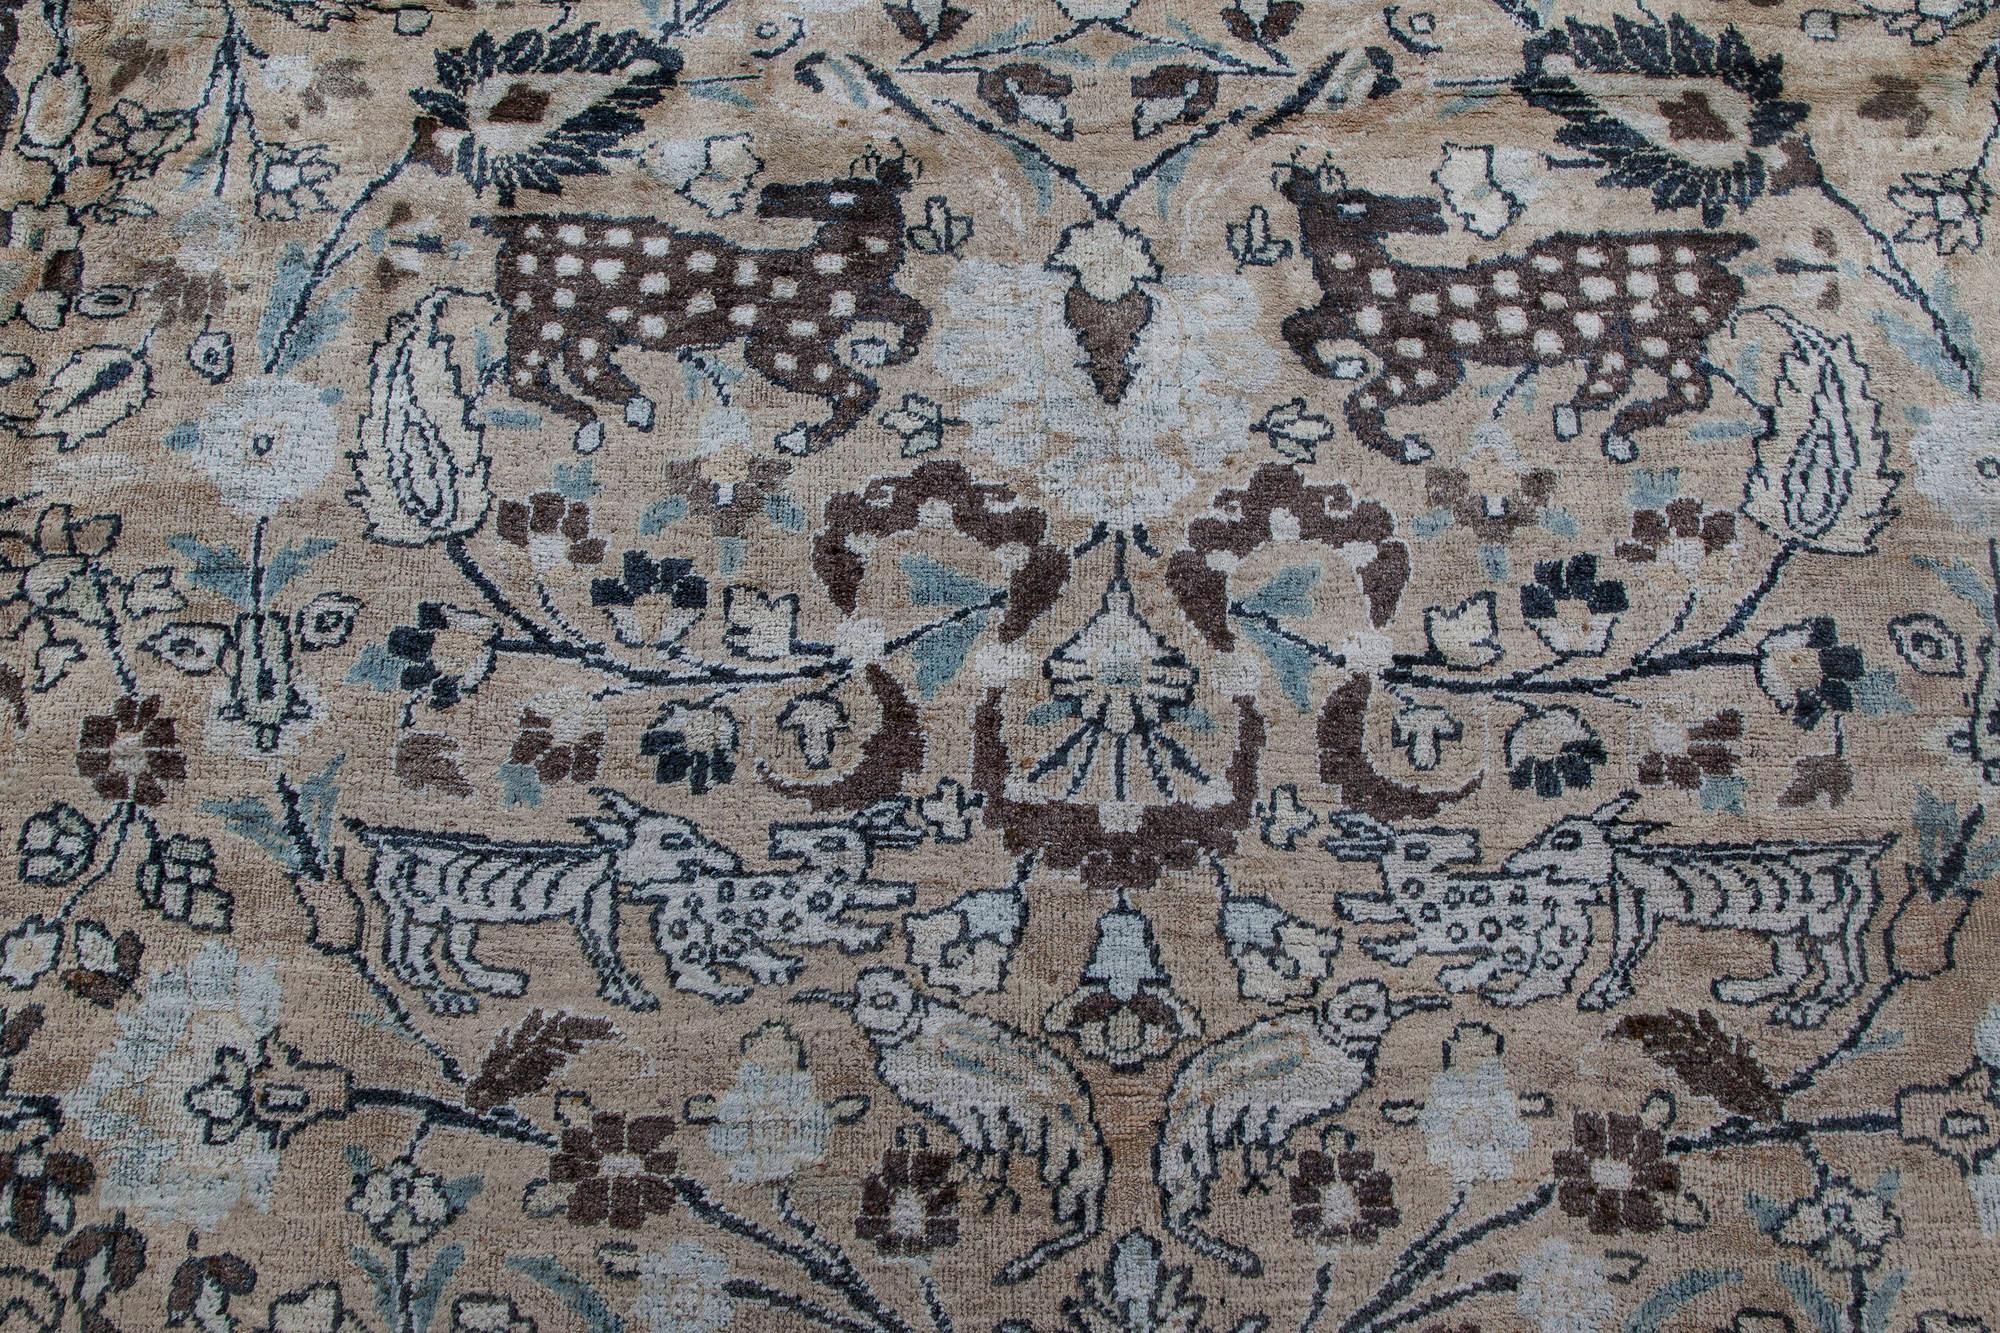 Authentic Persian Meshad Handmade Wool Rug
Size: 11'4